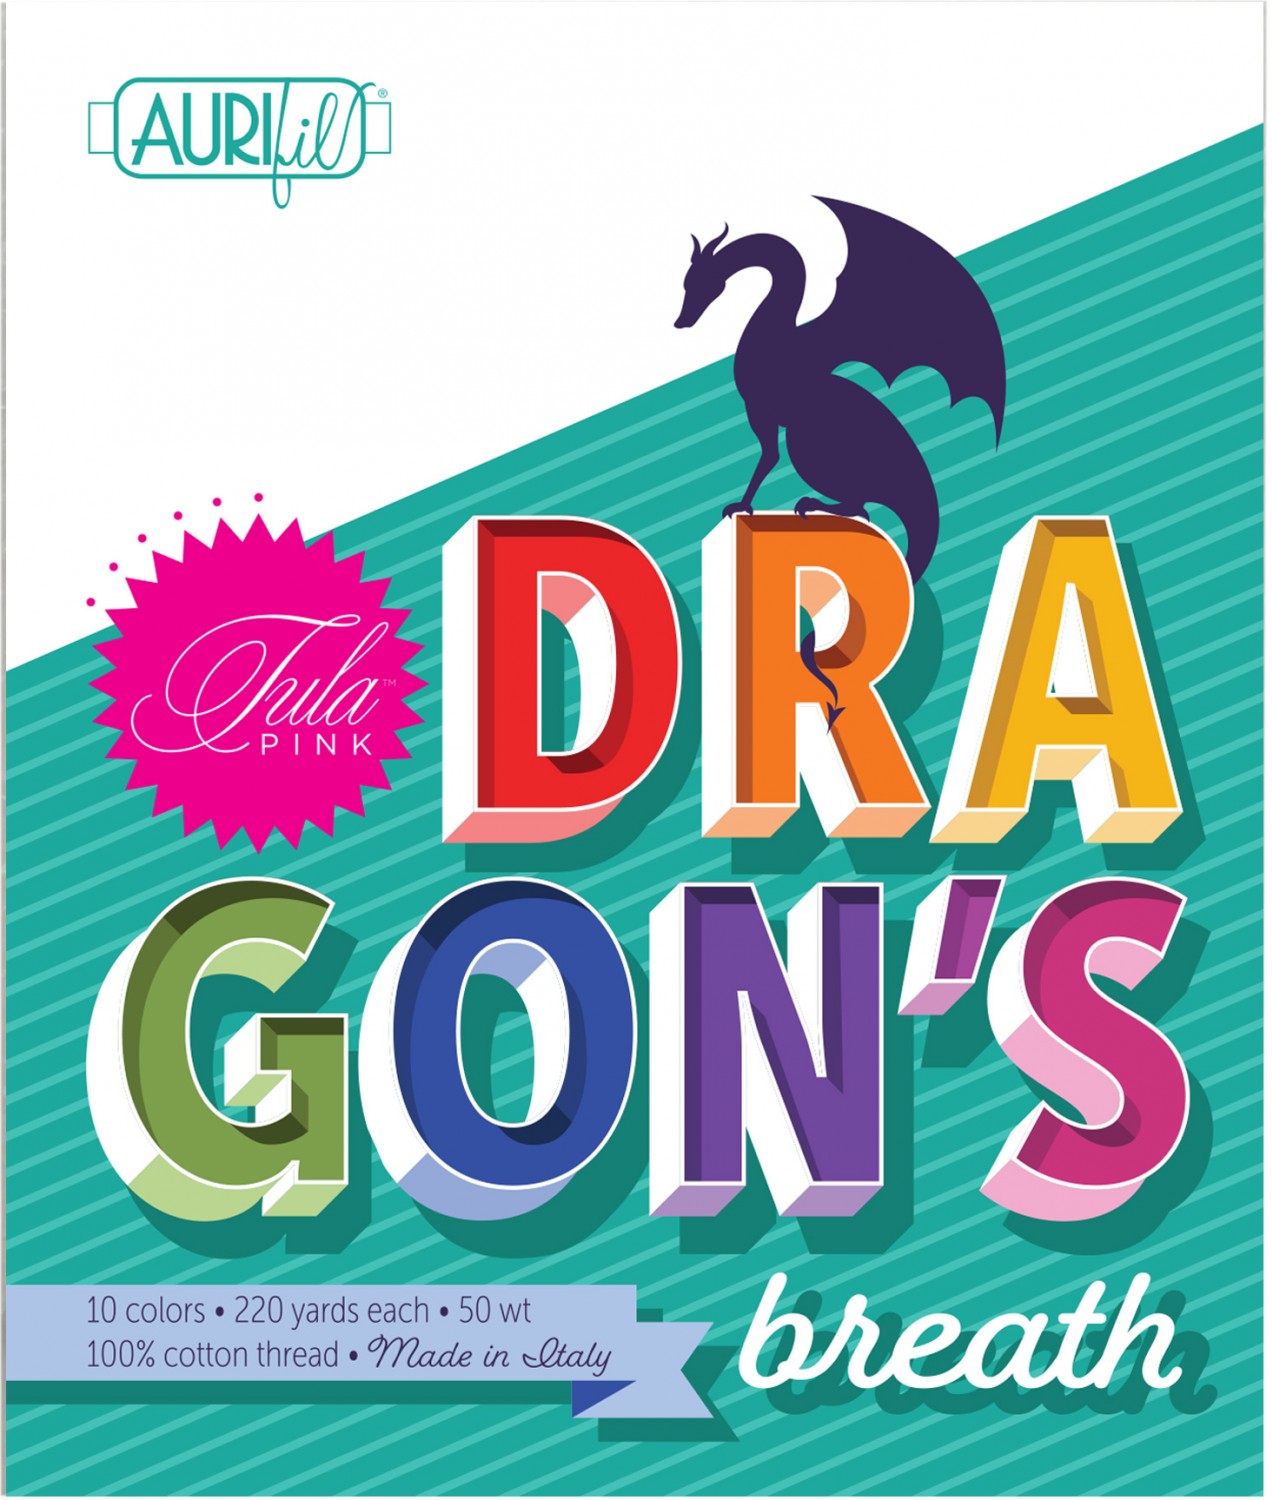 Dragon's Breath - Aurifil Thread Collection | Tula Pink